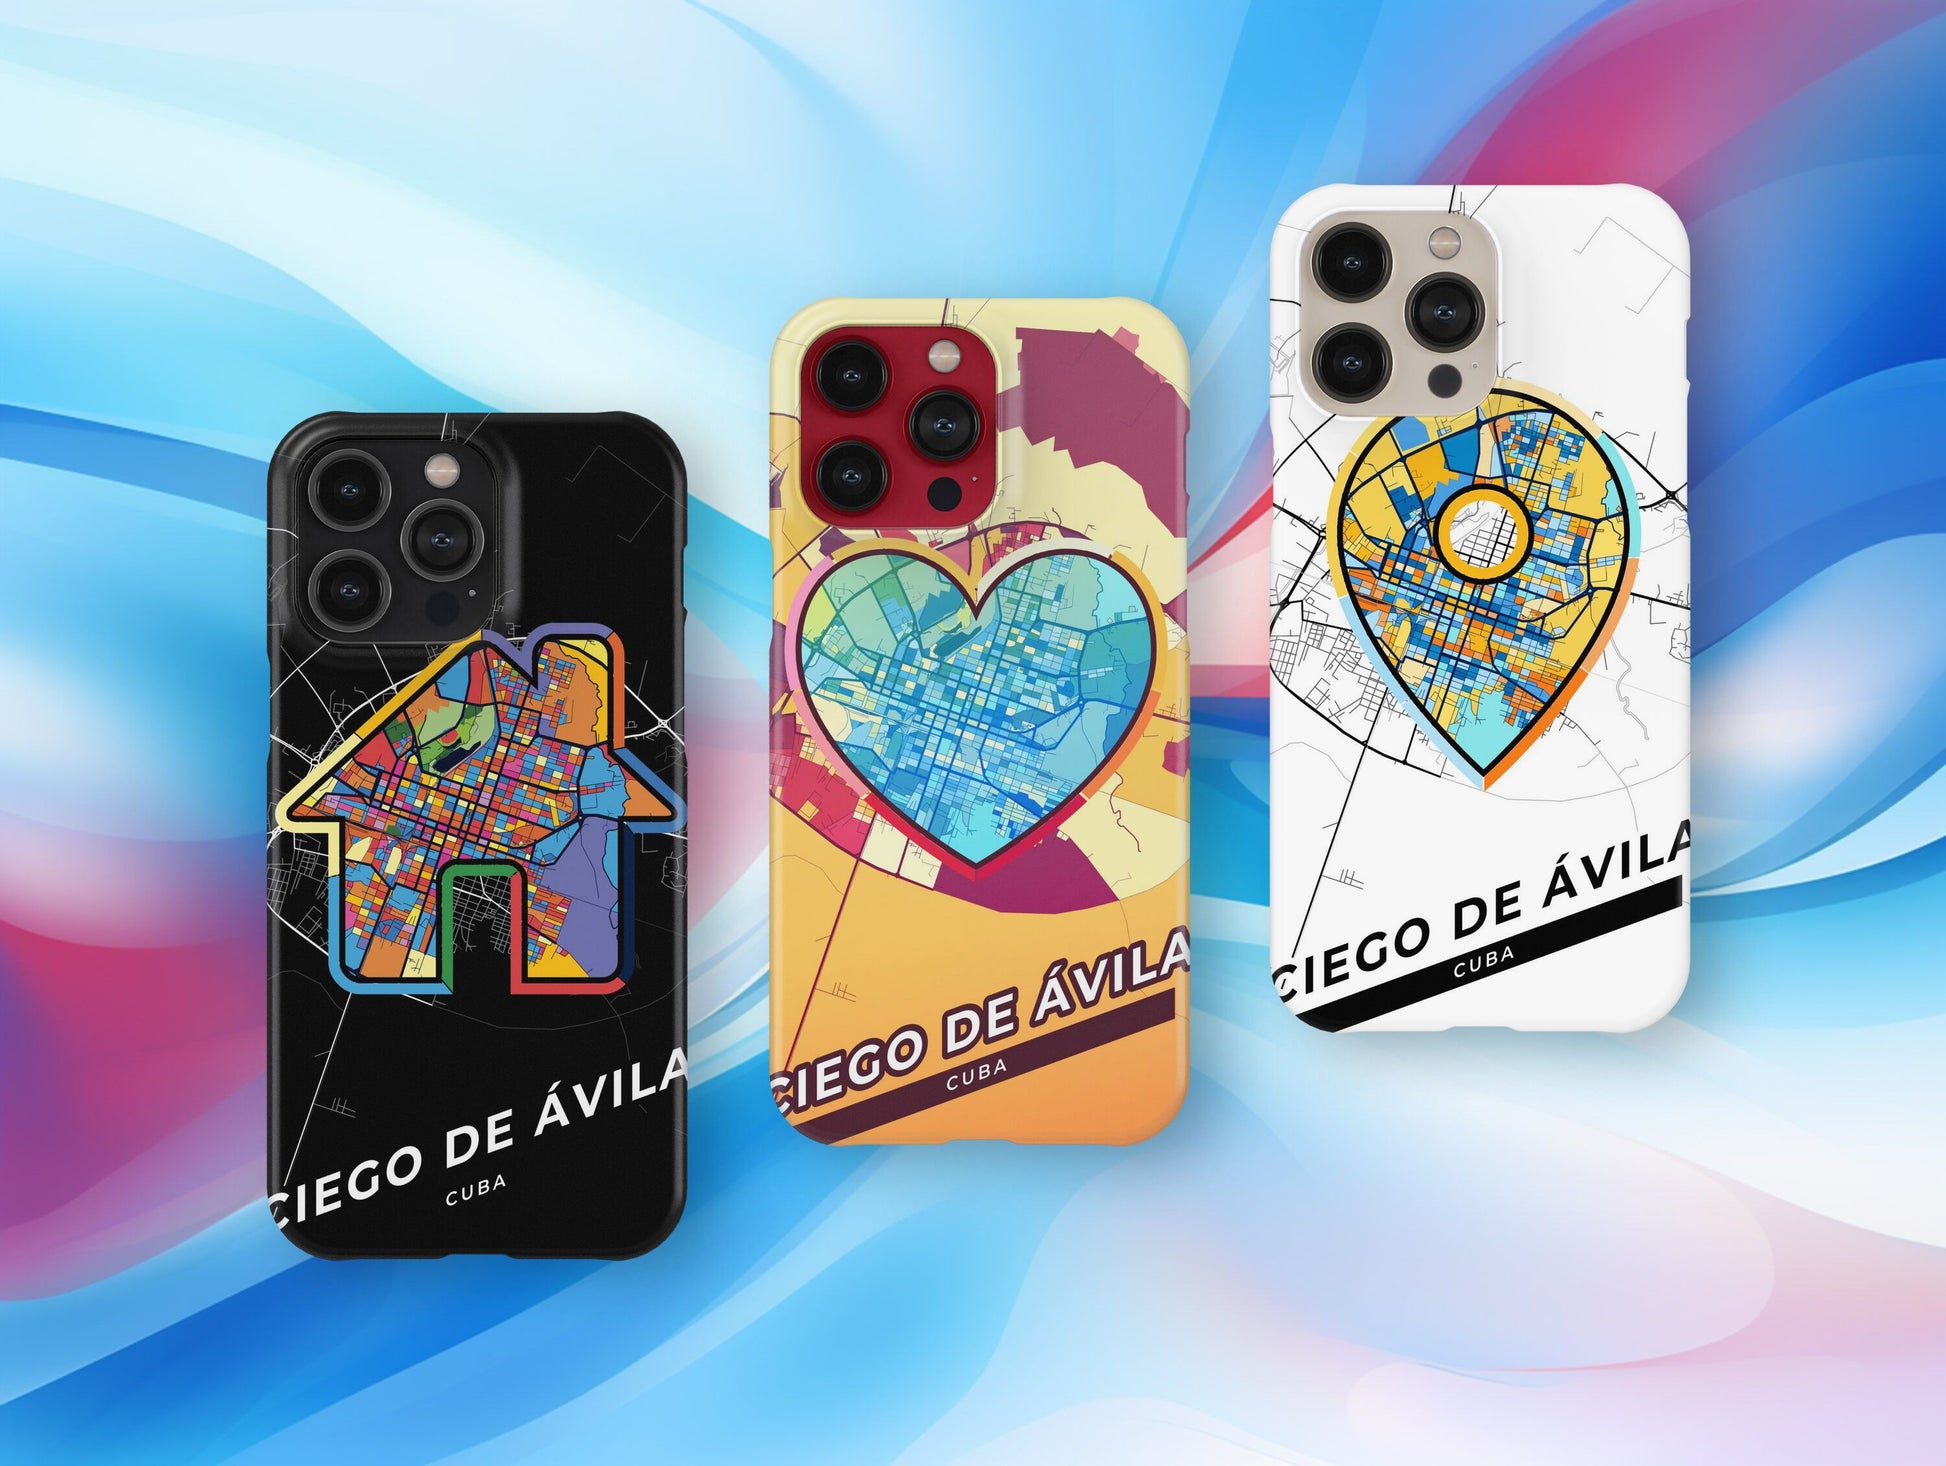 Ciego De Ávila Cuba slim phone case with colorful icon. Birthday, wedding or housewarming gift. Couple match cases.